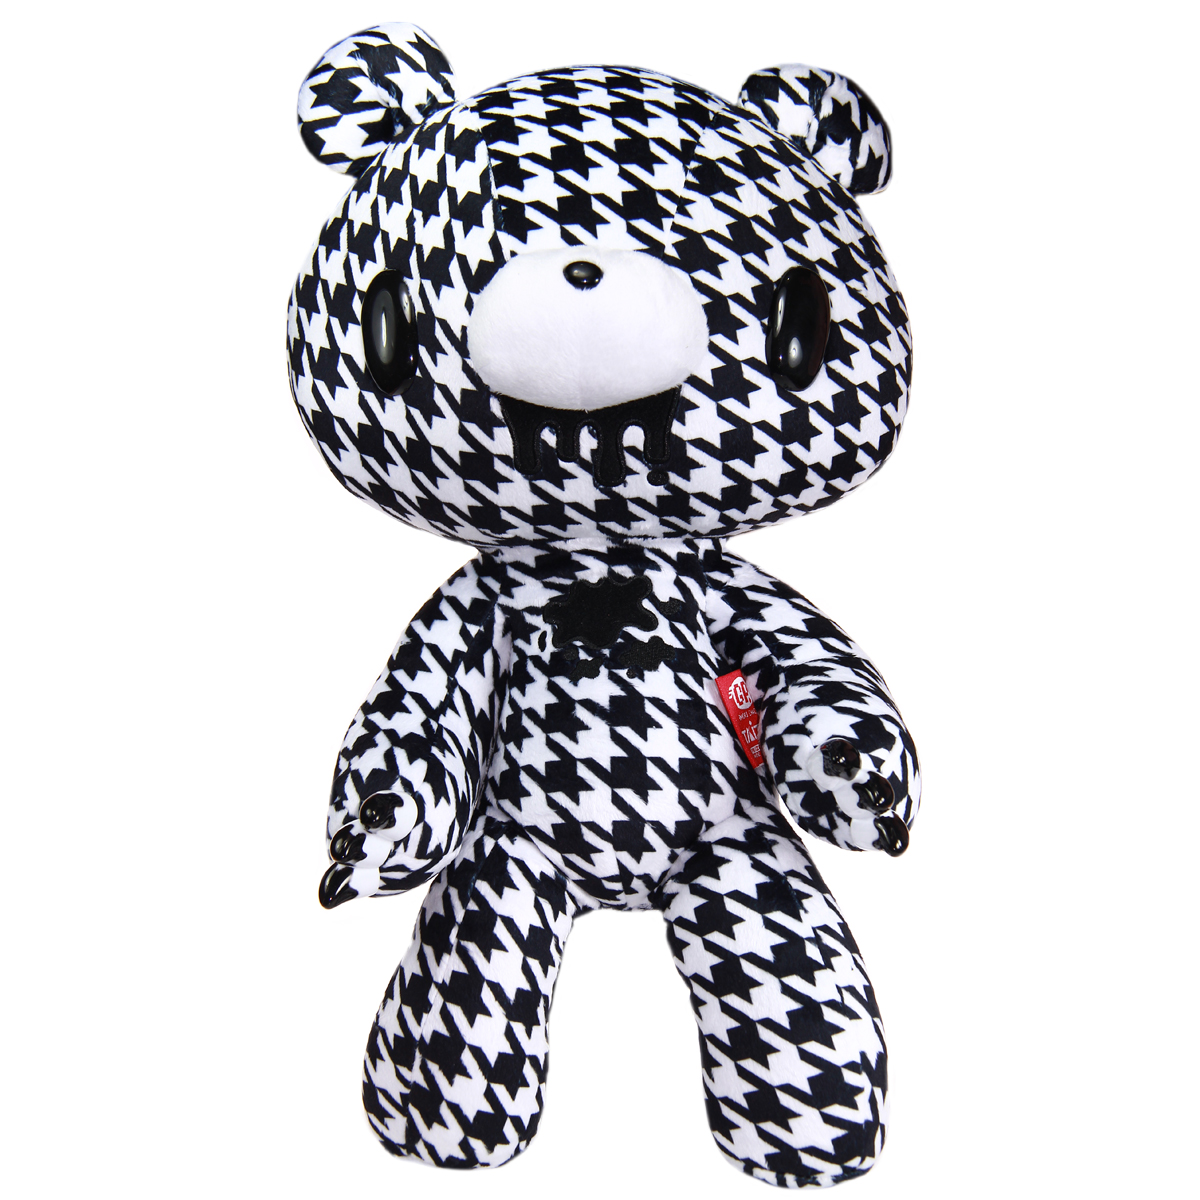 Taito Textillic IV Gloomy Bear Plush Doll Black White GP #526 17 Inches